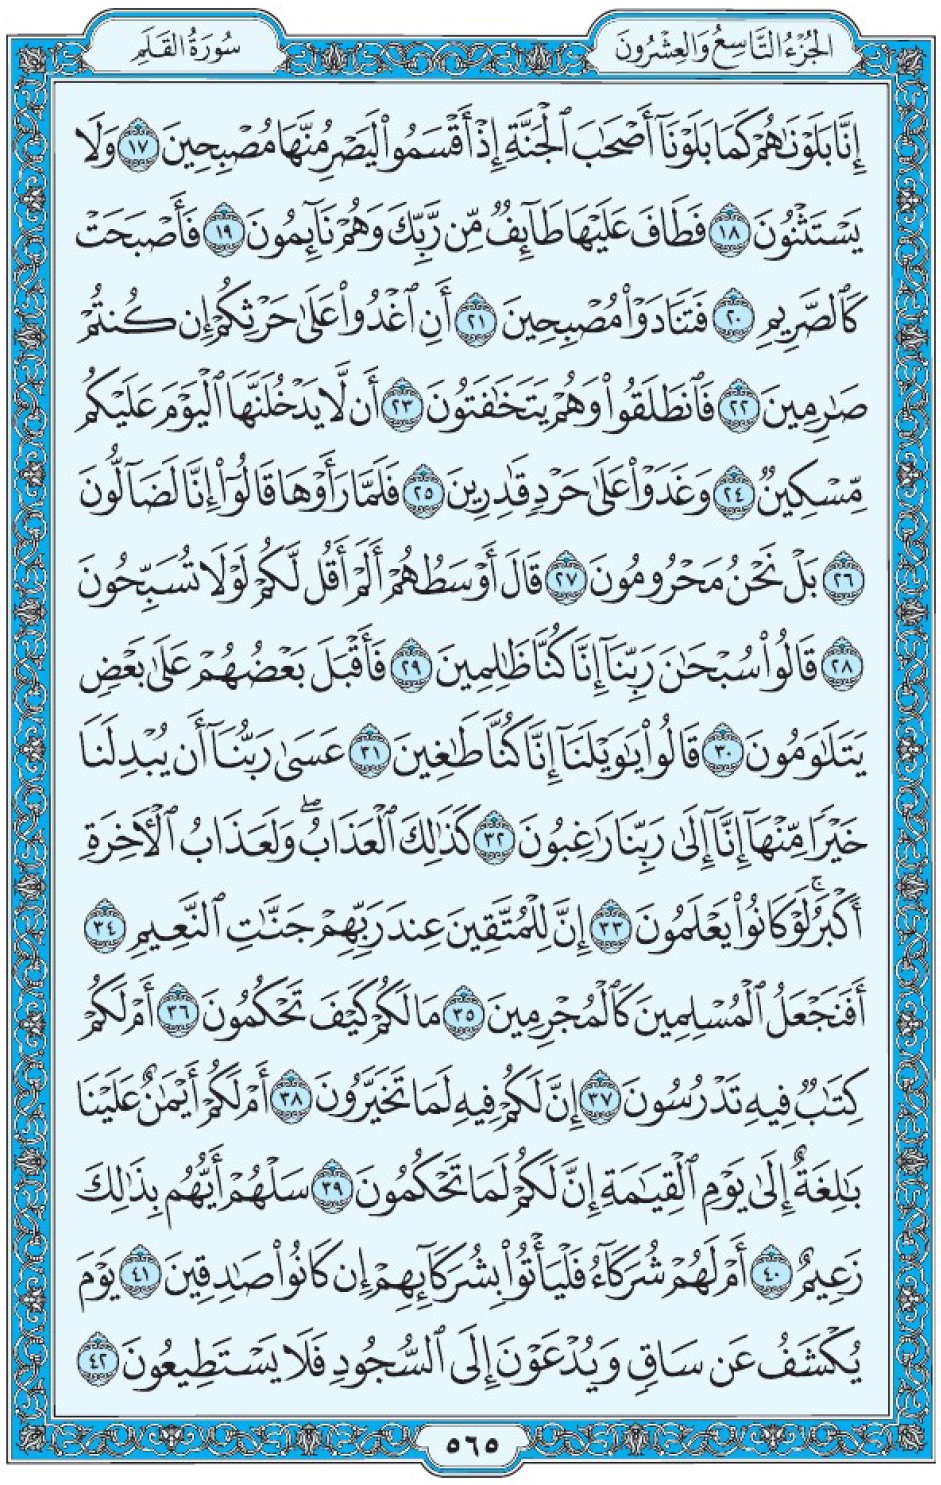 Коран Мединский мусхаф страница 565, сура аль-Калям, аят 17-42